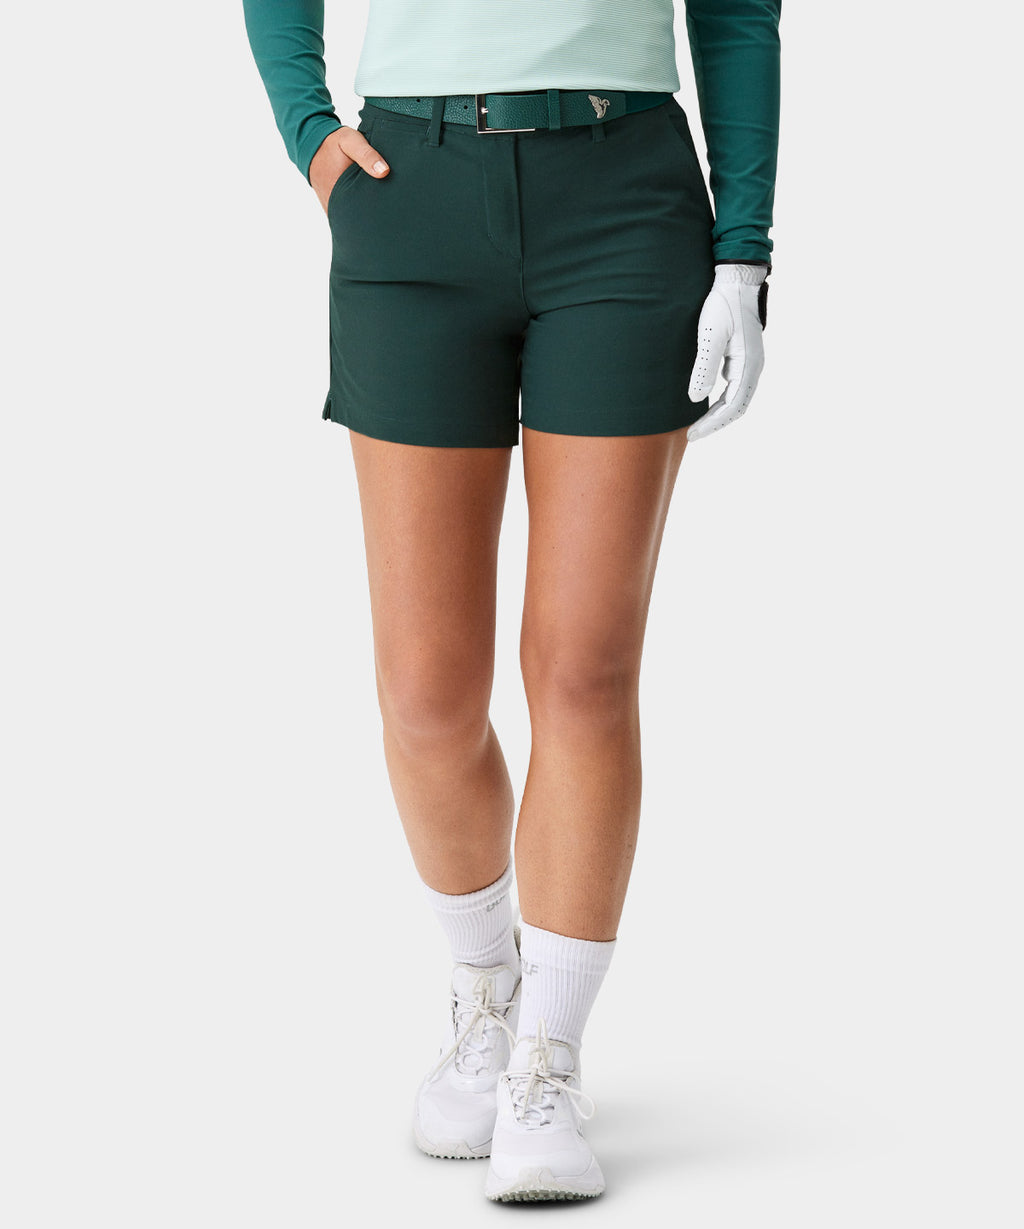 Teal Four-Way Stretch Shorts Macade Golf